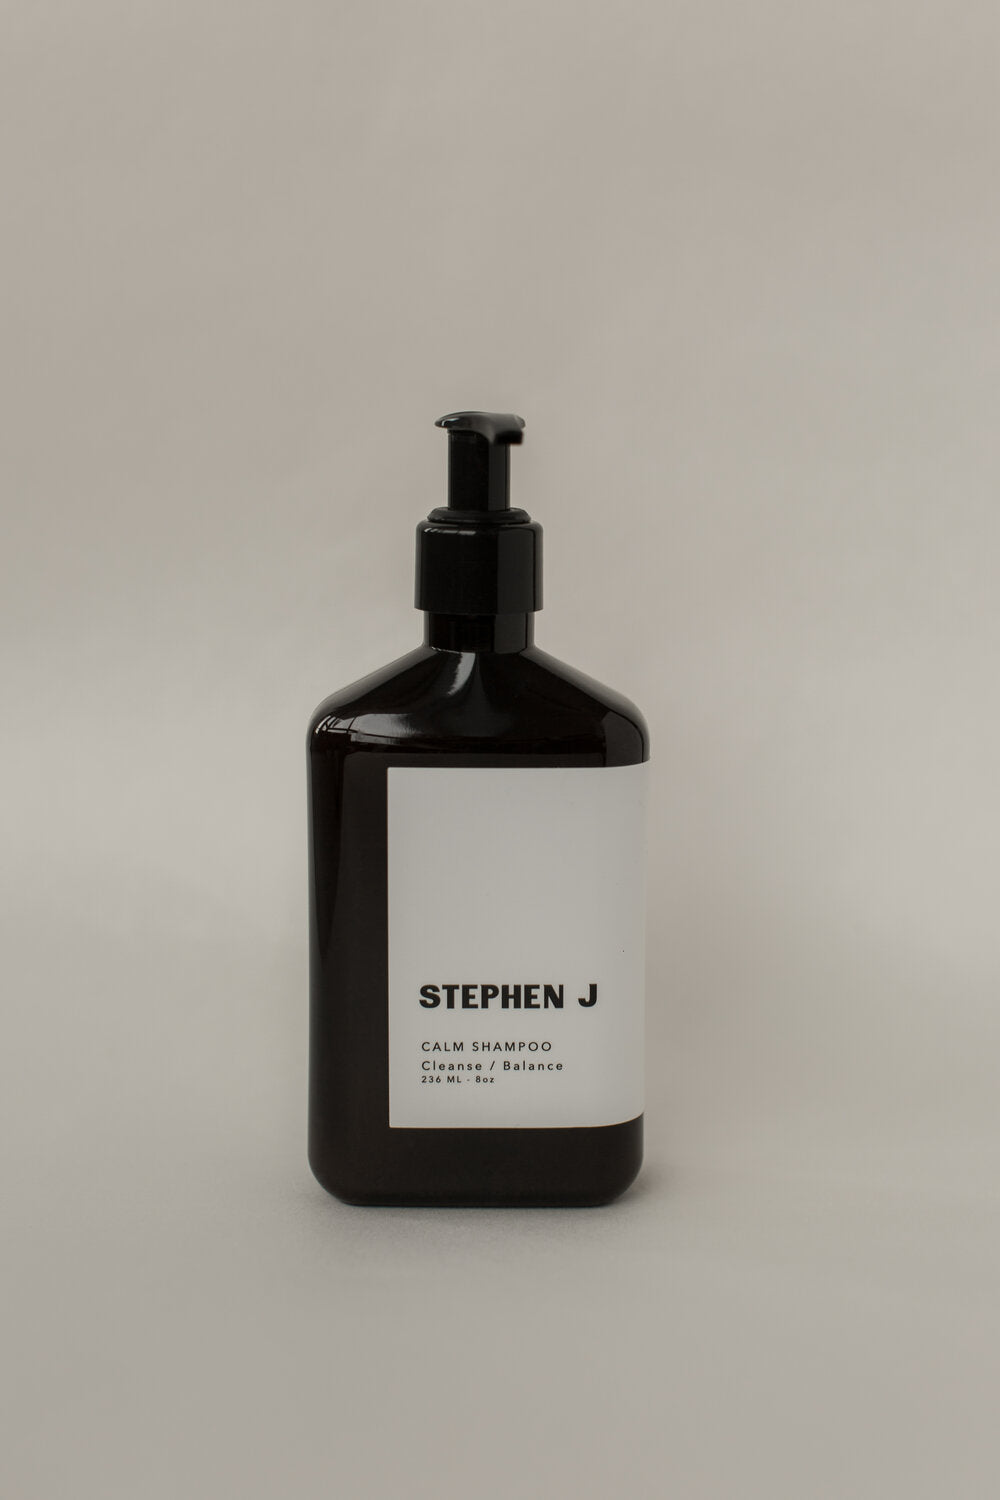 Stephen J Calm Shampoo